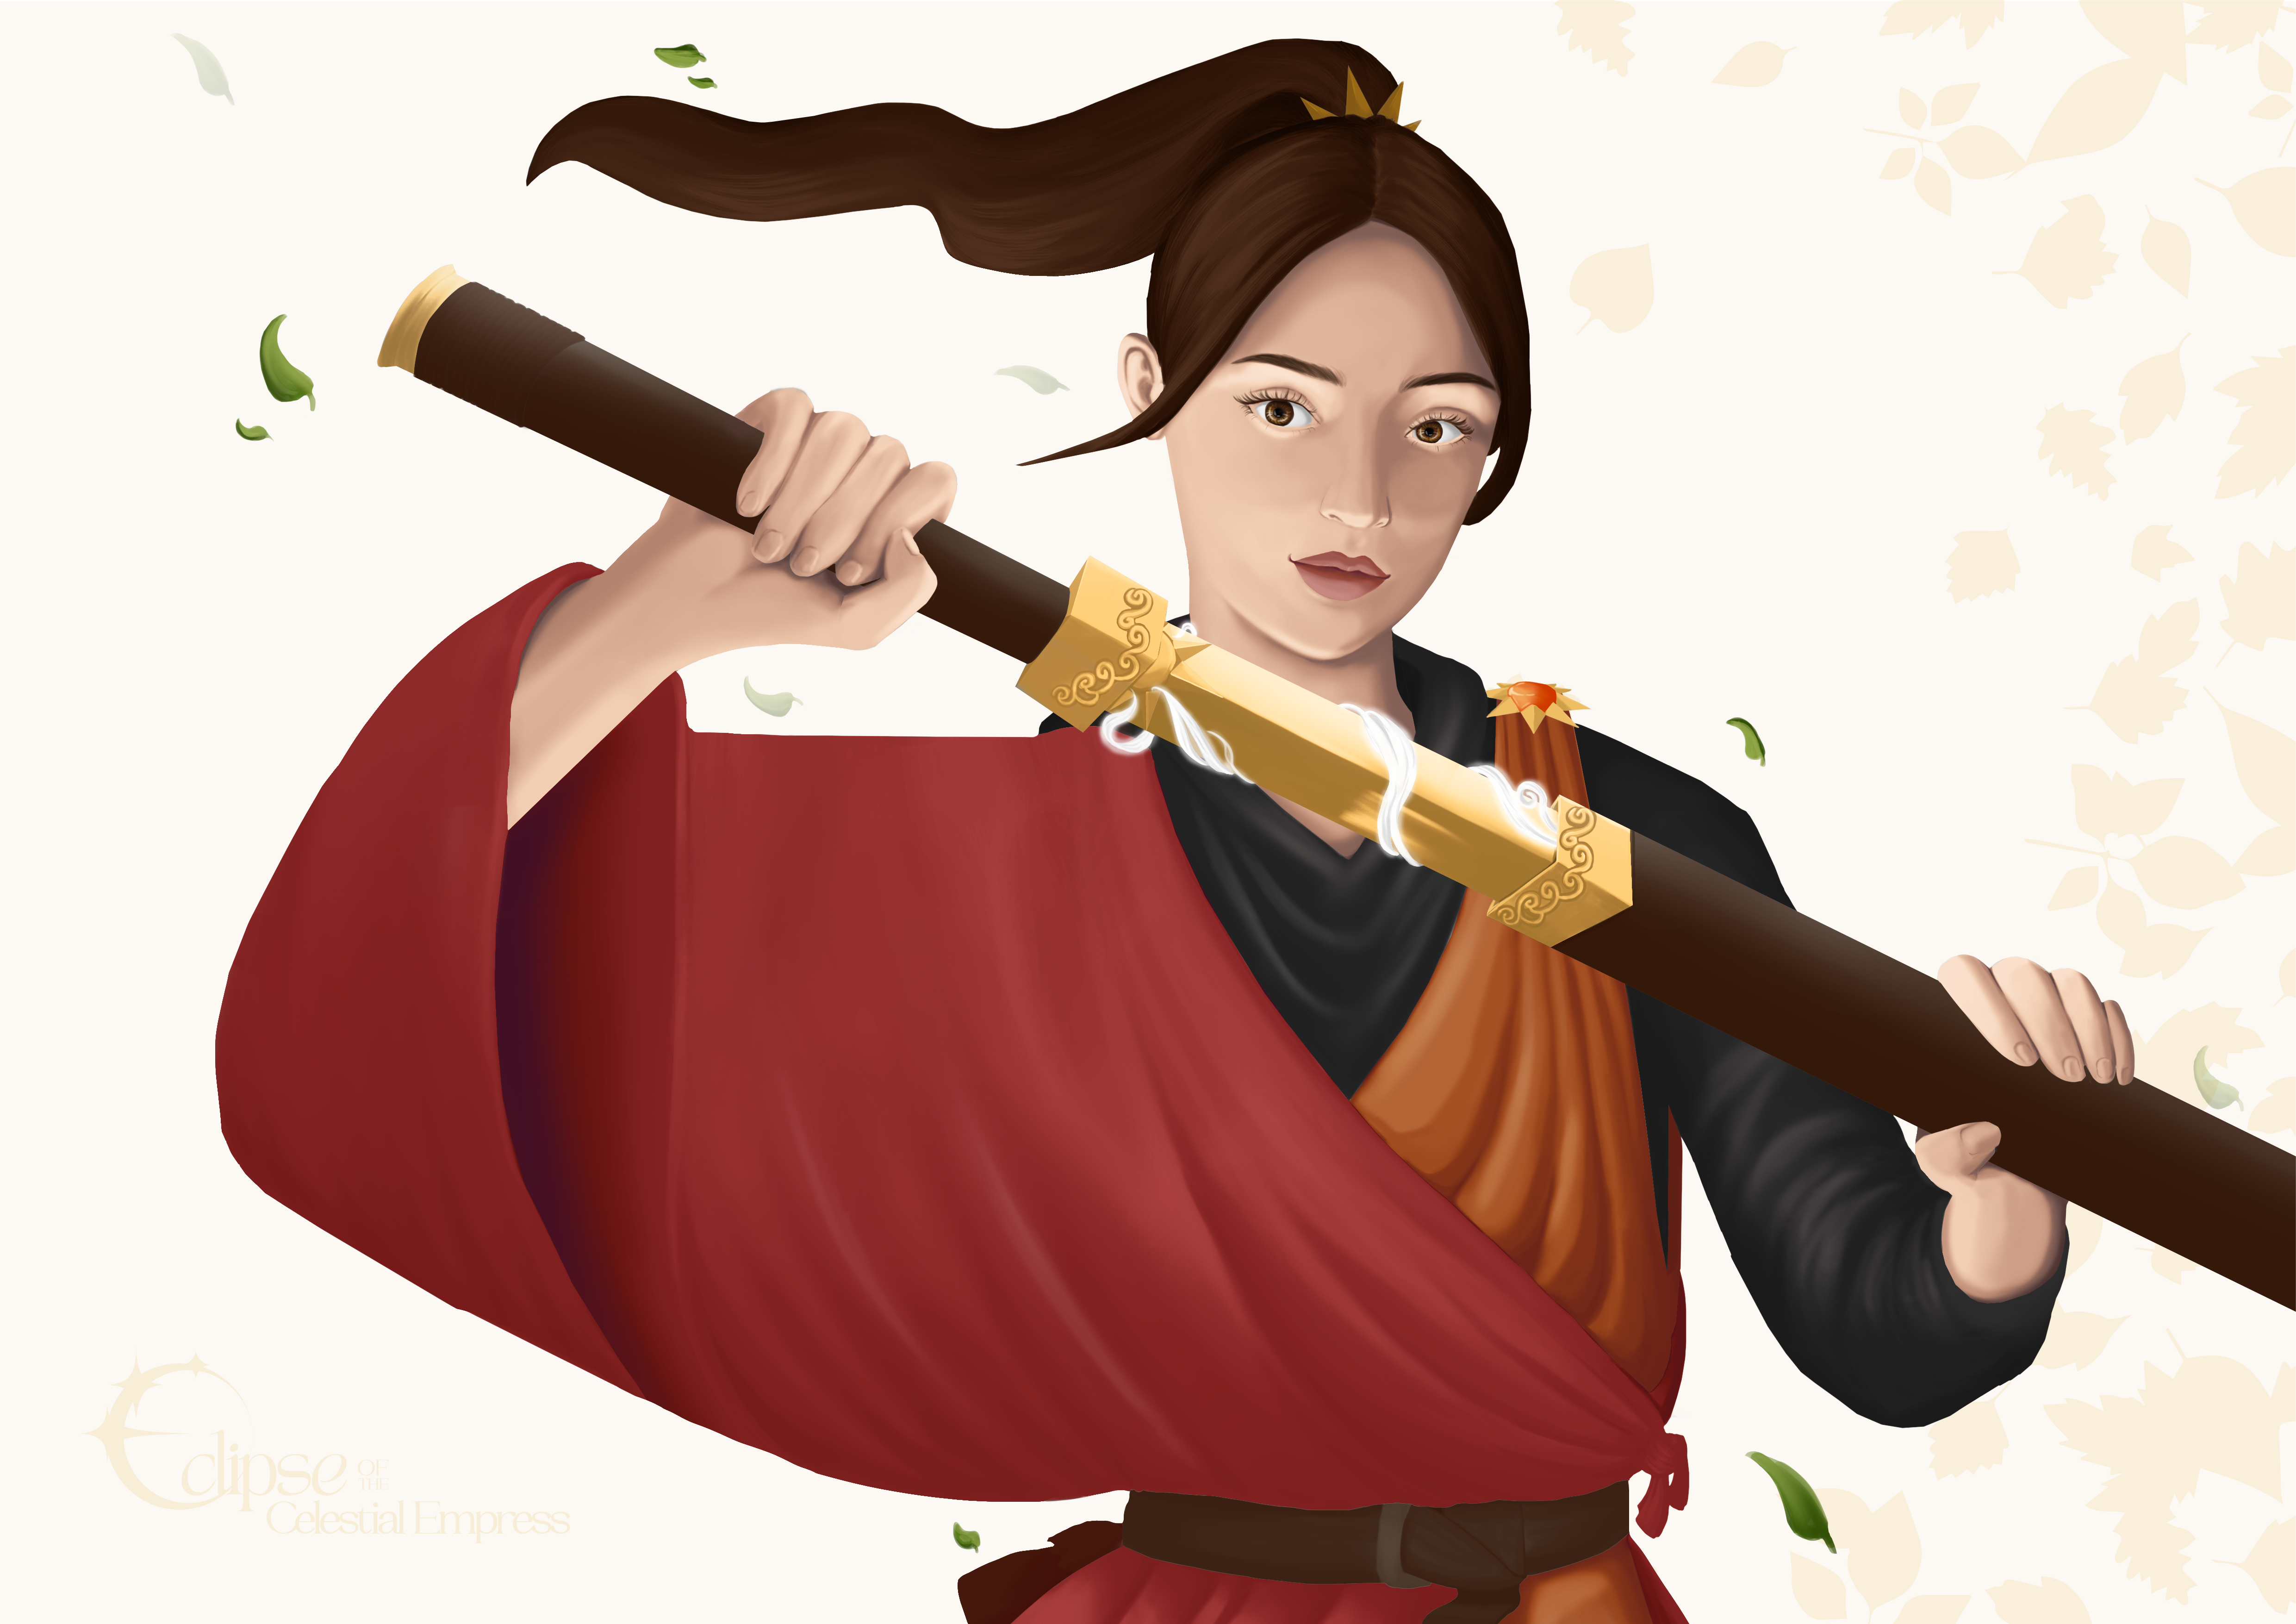 a cartoon of a woman holding a sword